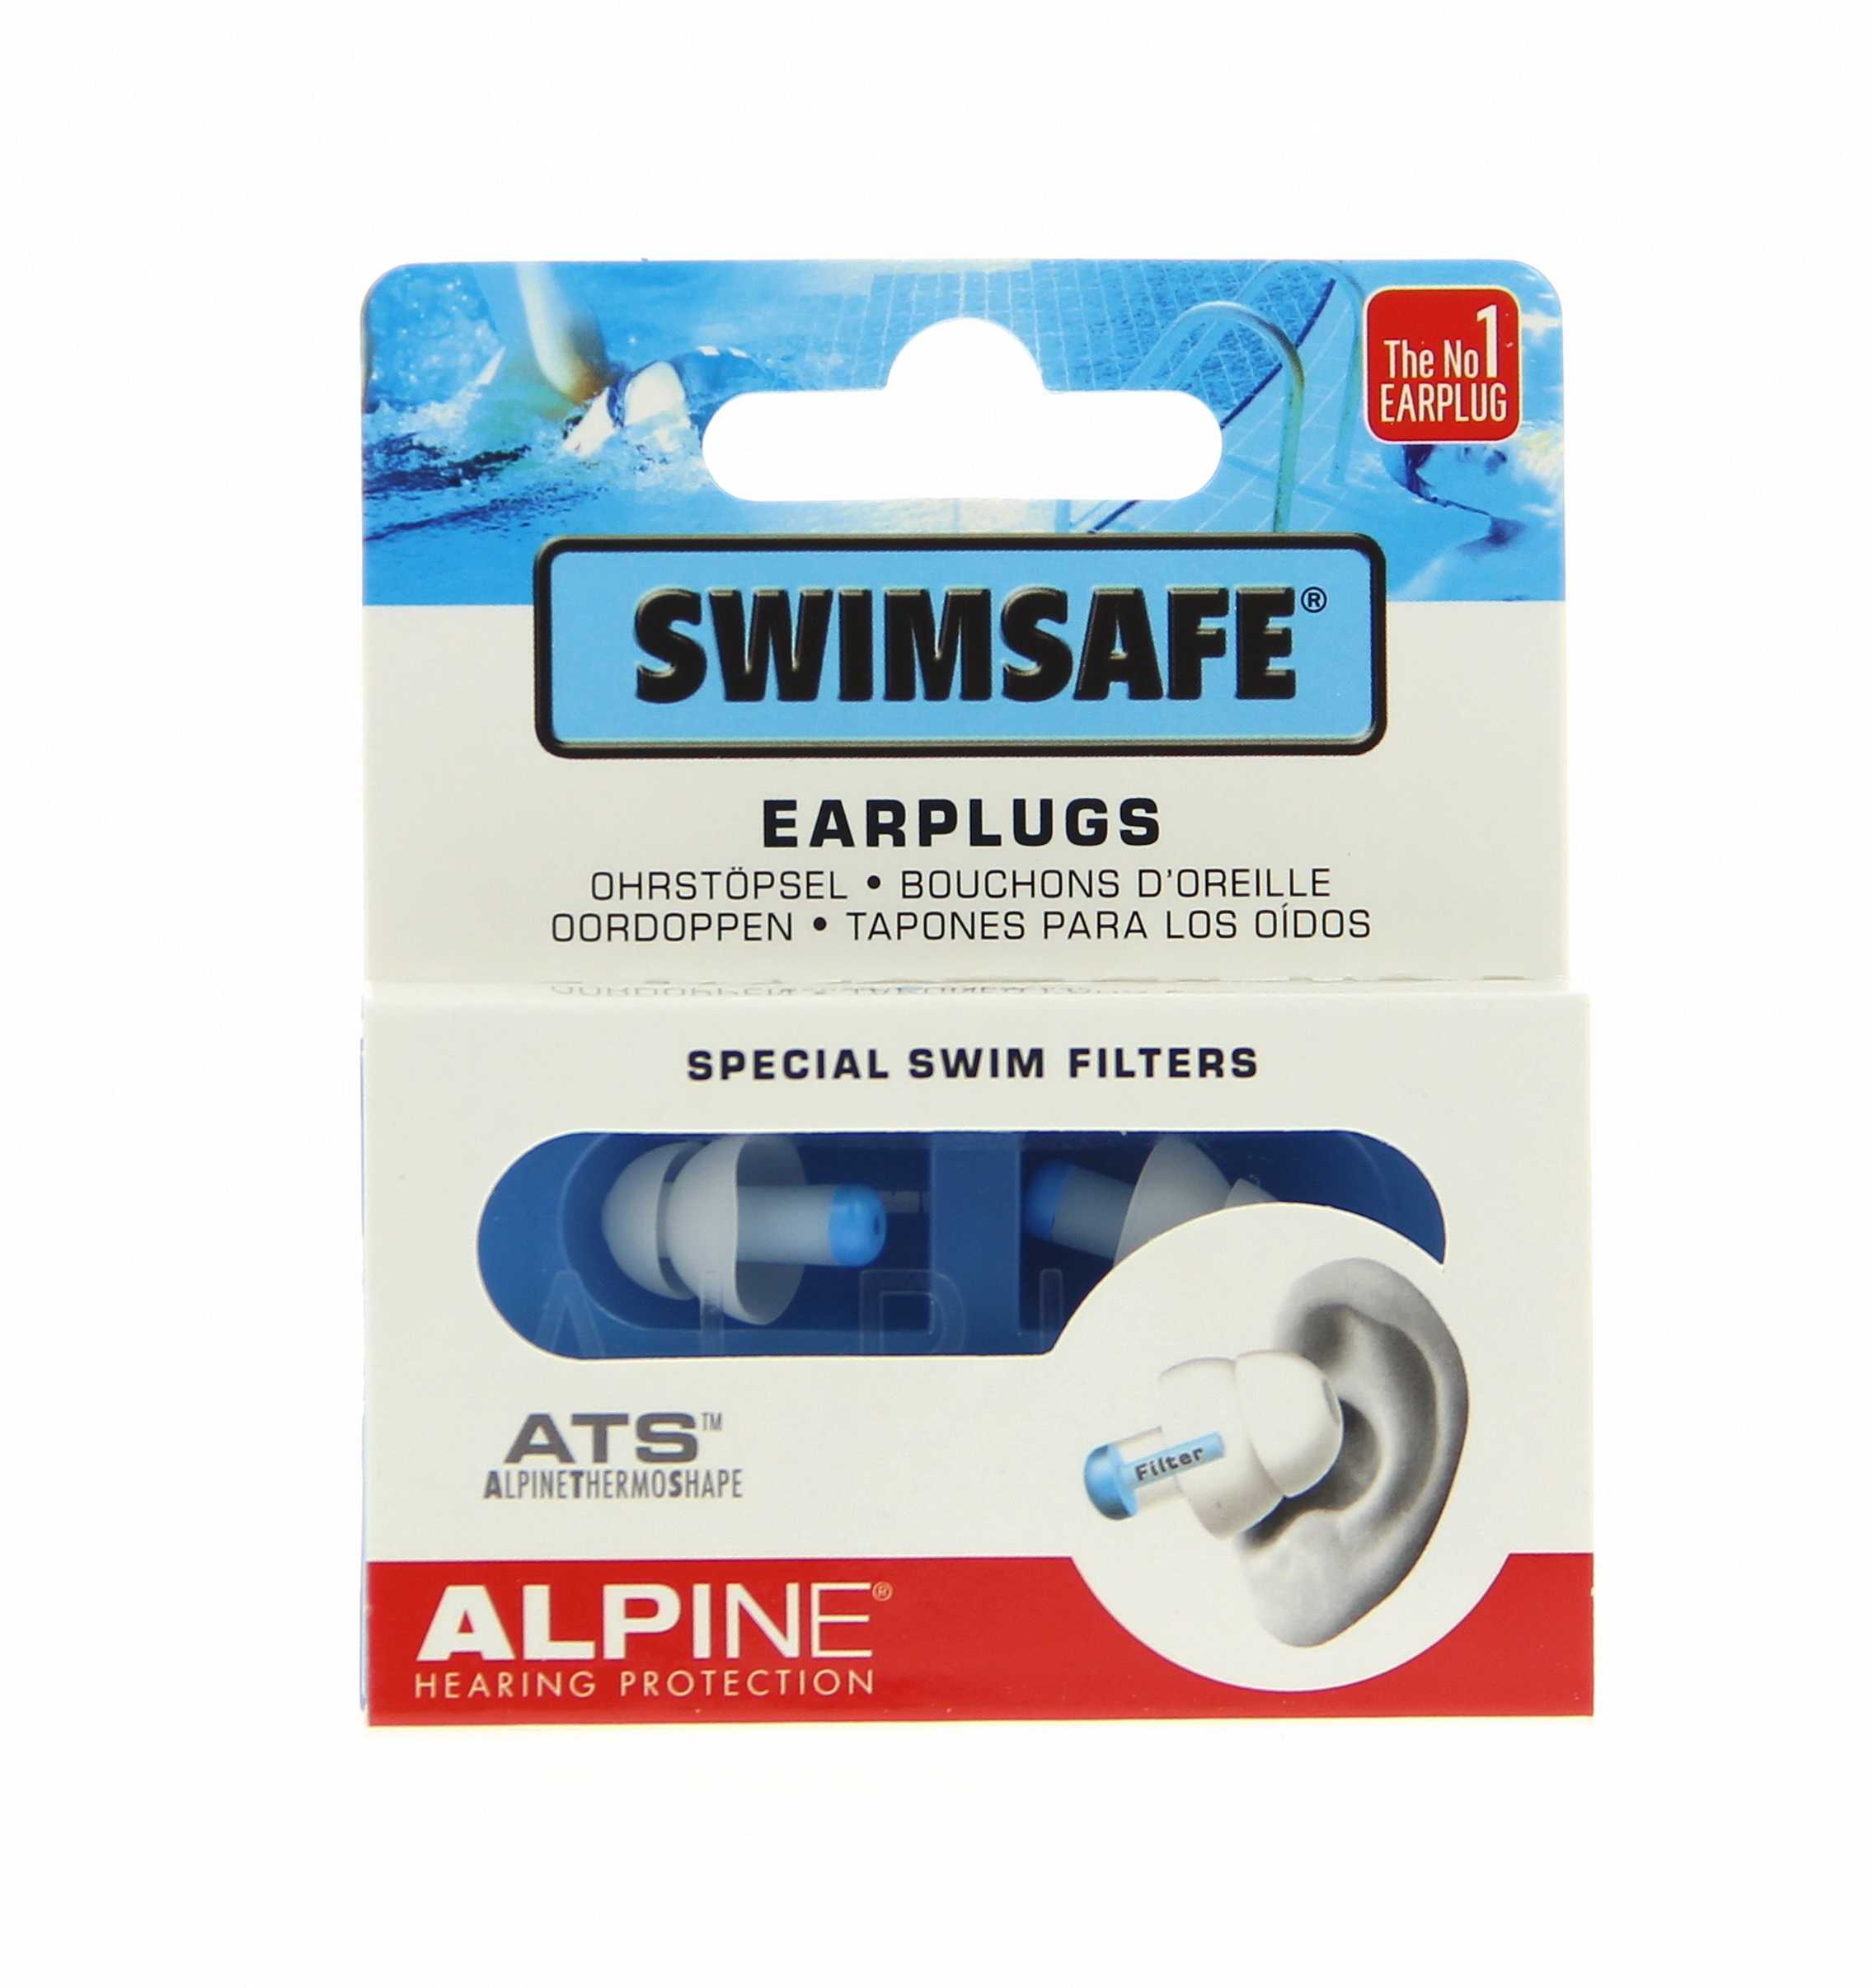 Bouchons d'oreille pour nager alpine swimsafe - Optical Center